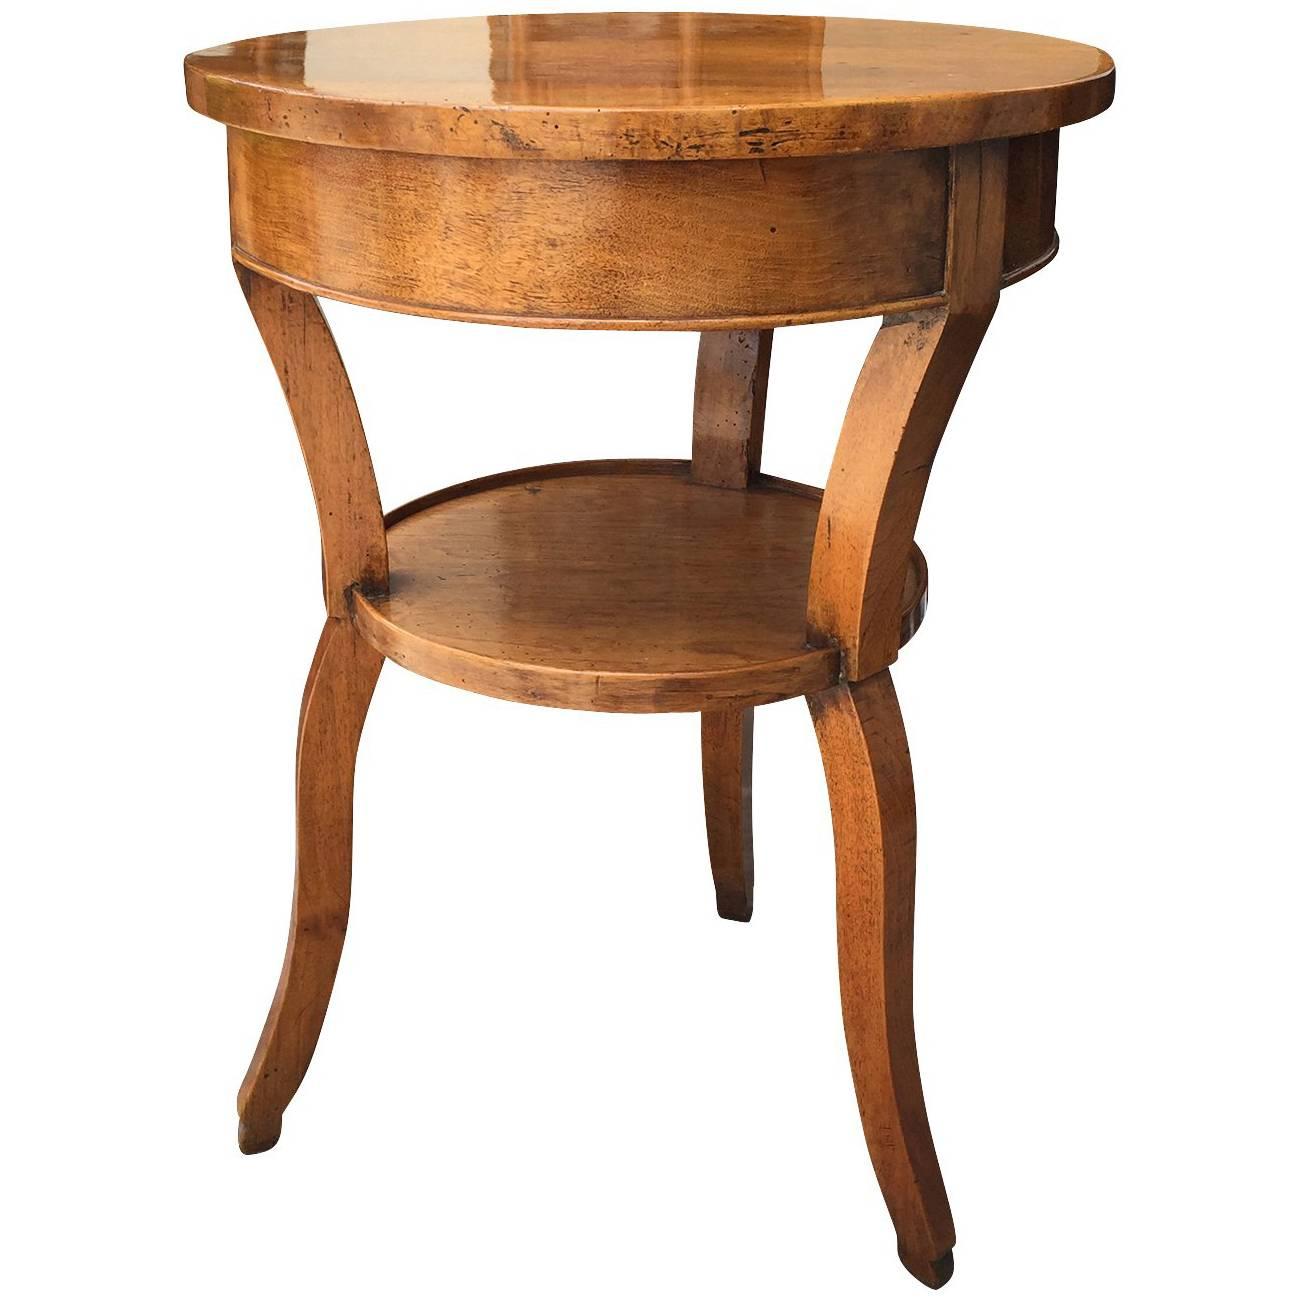 19th Century Neoclassical Biedermeier Table, Figured Walnut